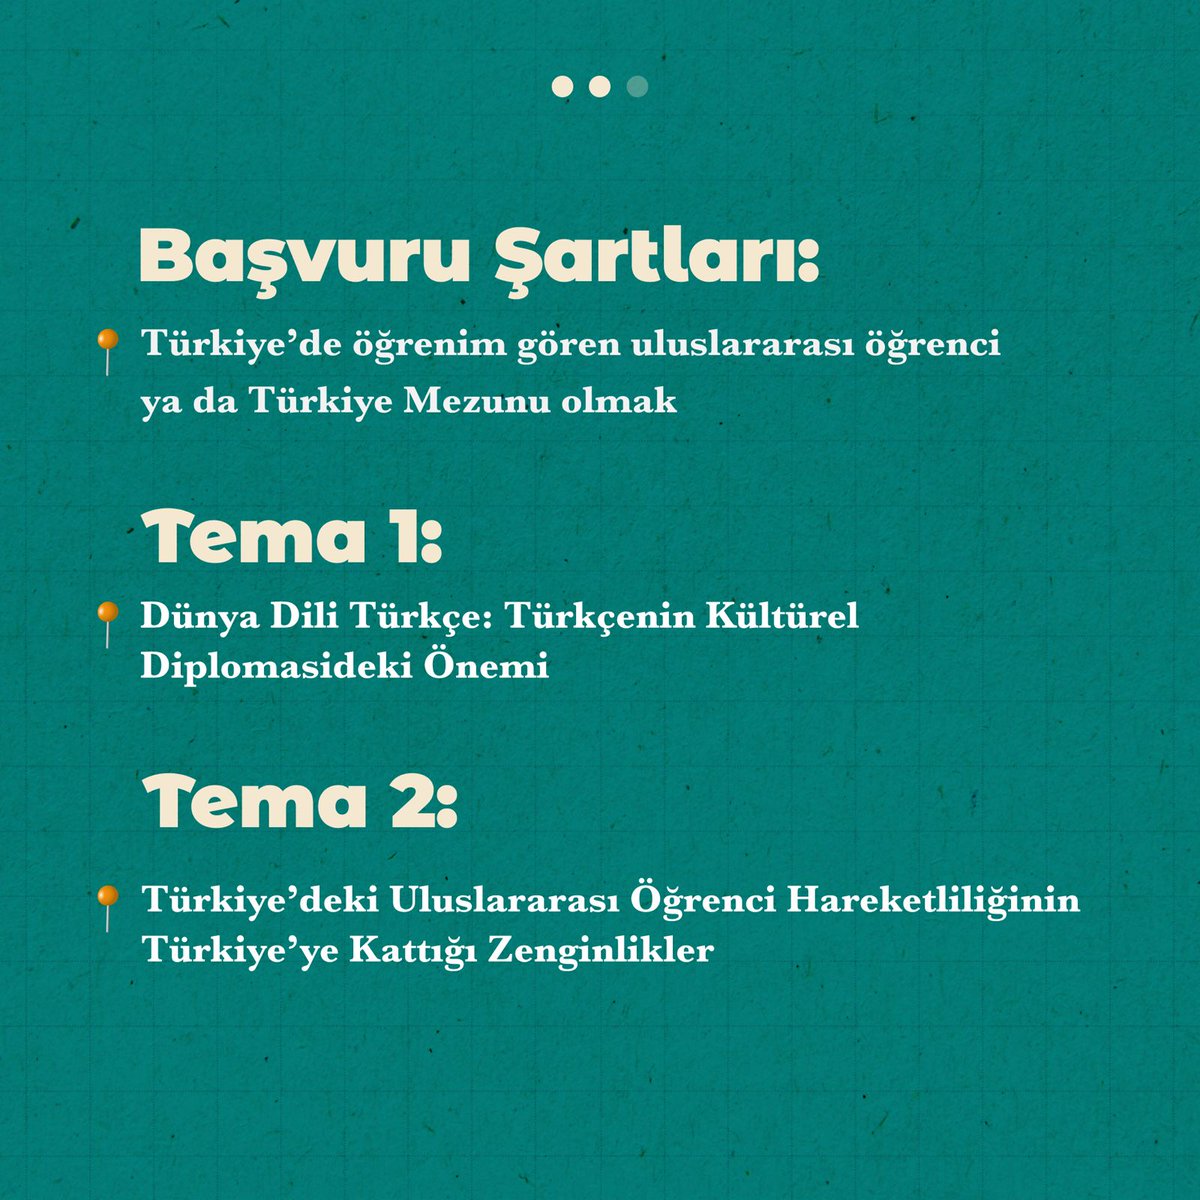 TurkiyeBurslari tweet picture